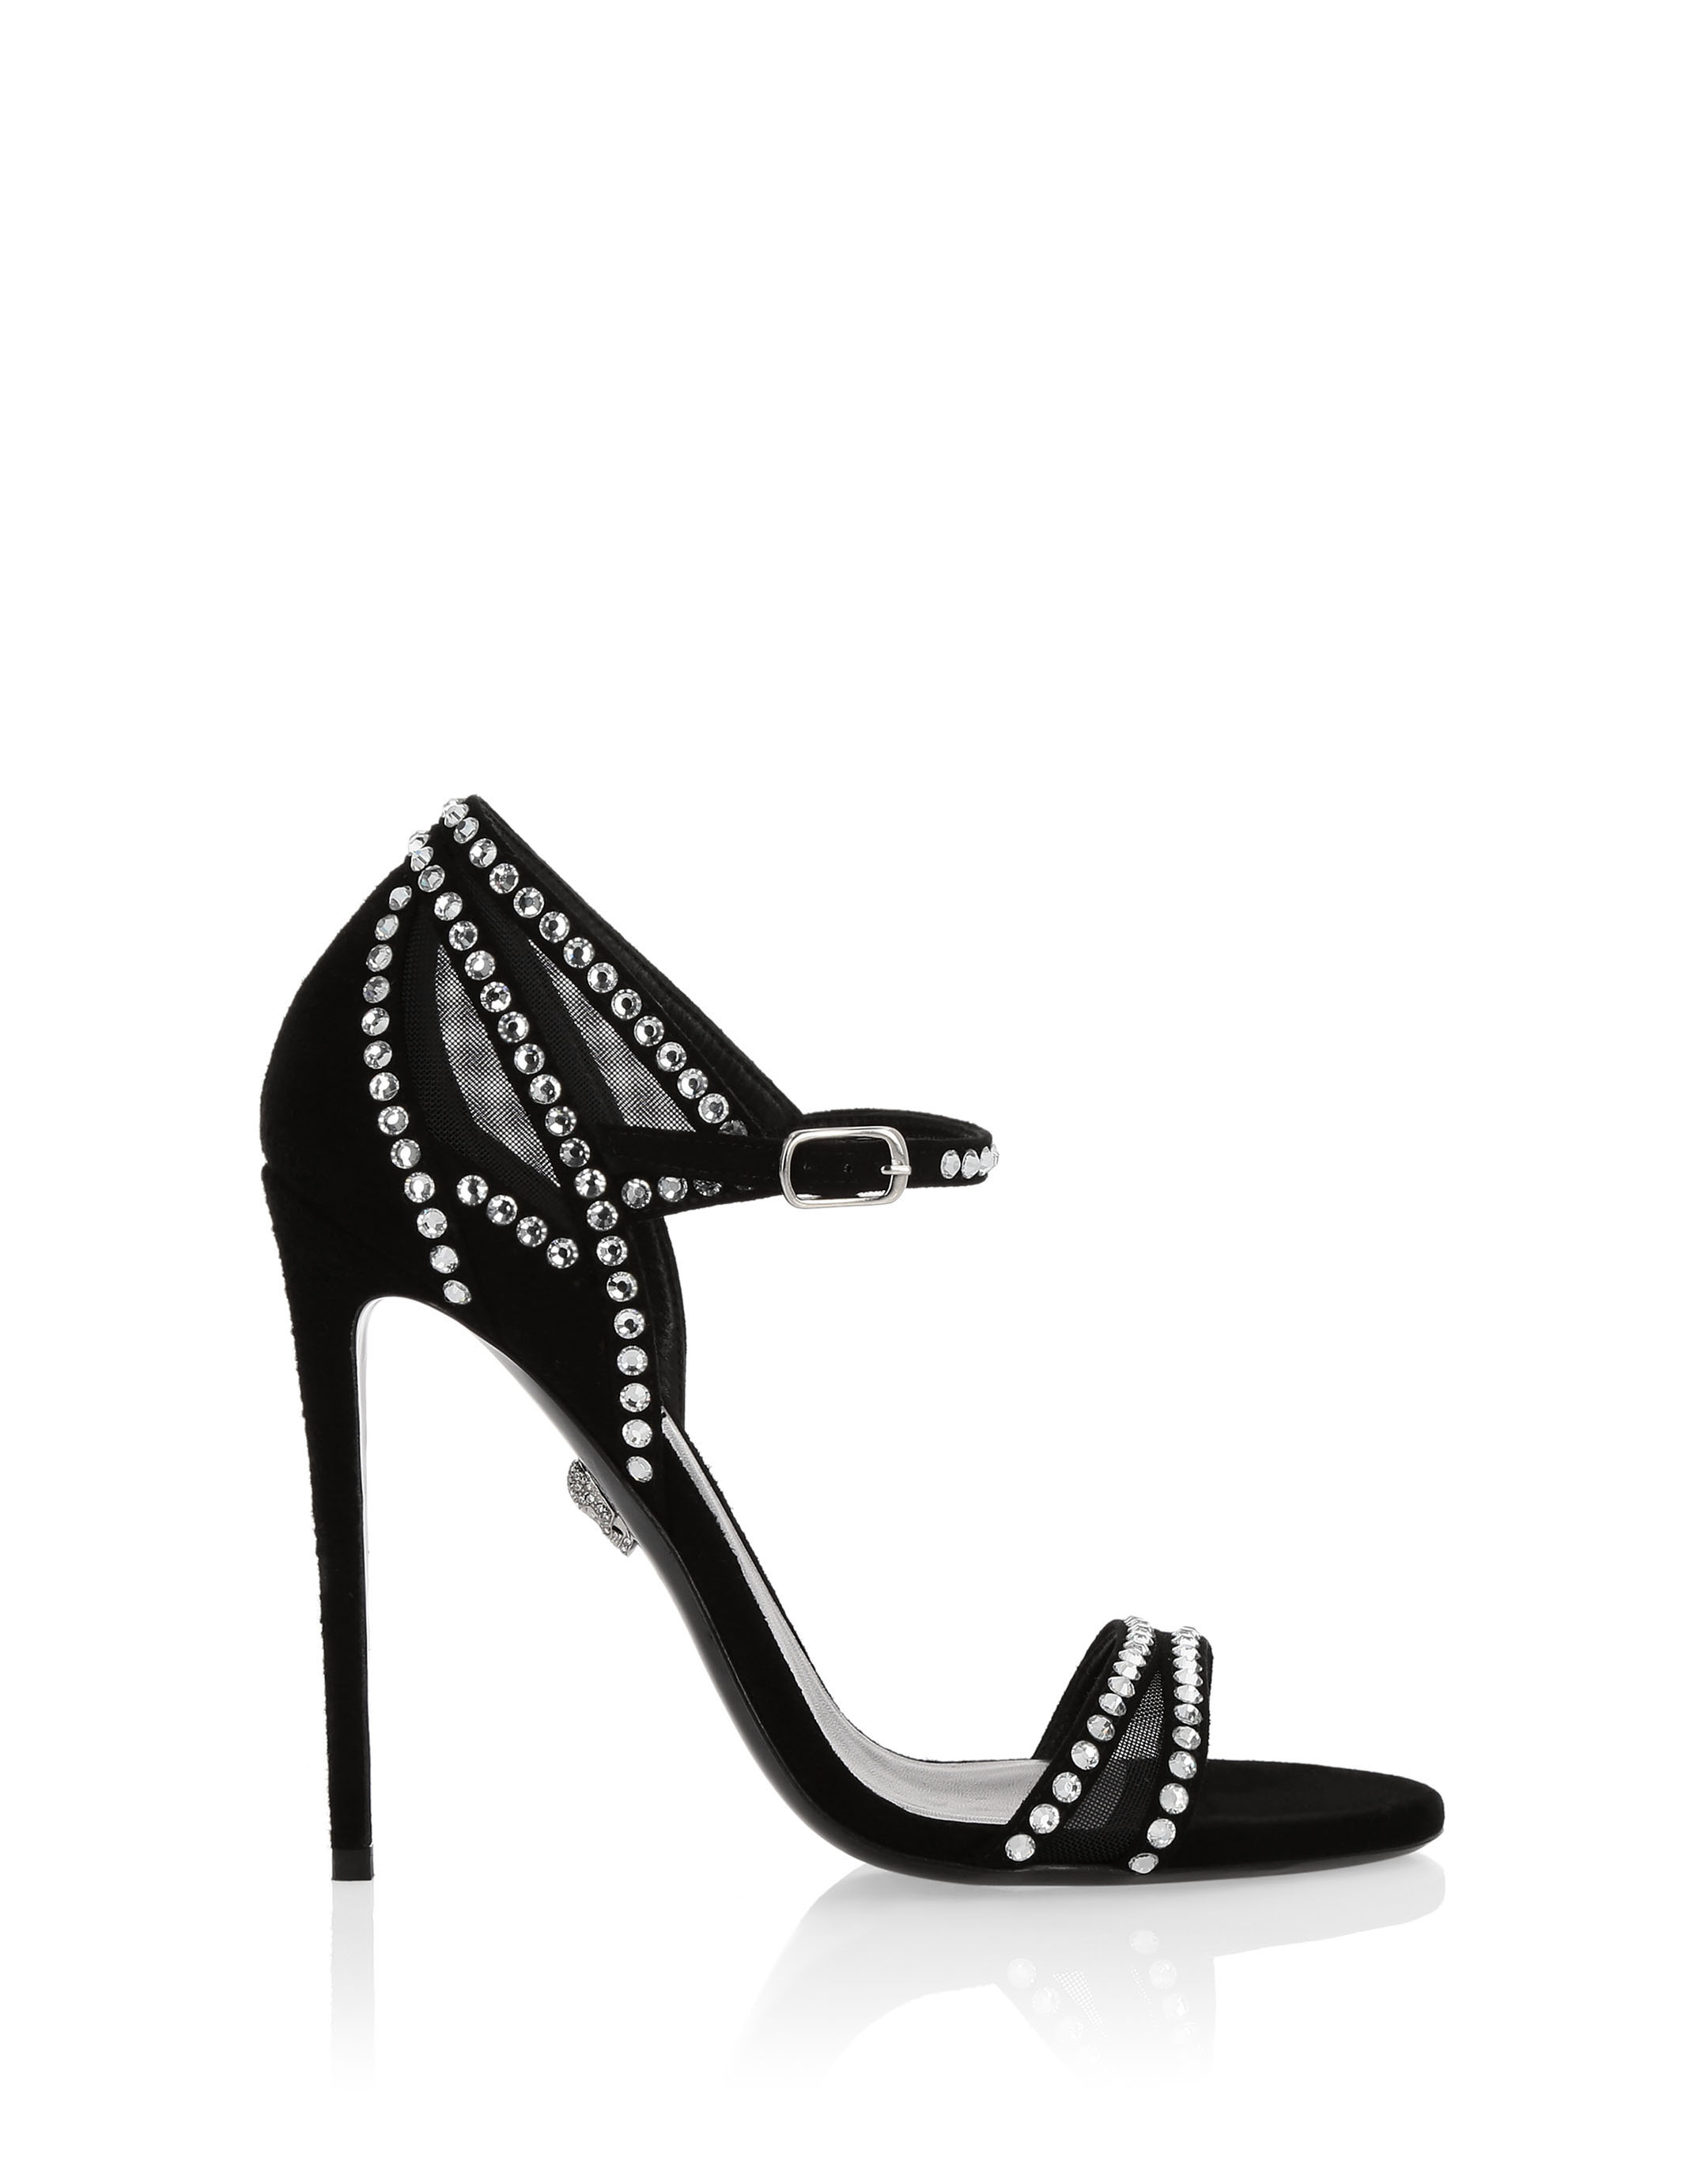 SAEDA SANDAL 100 | Black Suede Sandals with Crystal Embellishment | JIMMY  CHOO